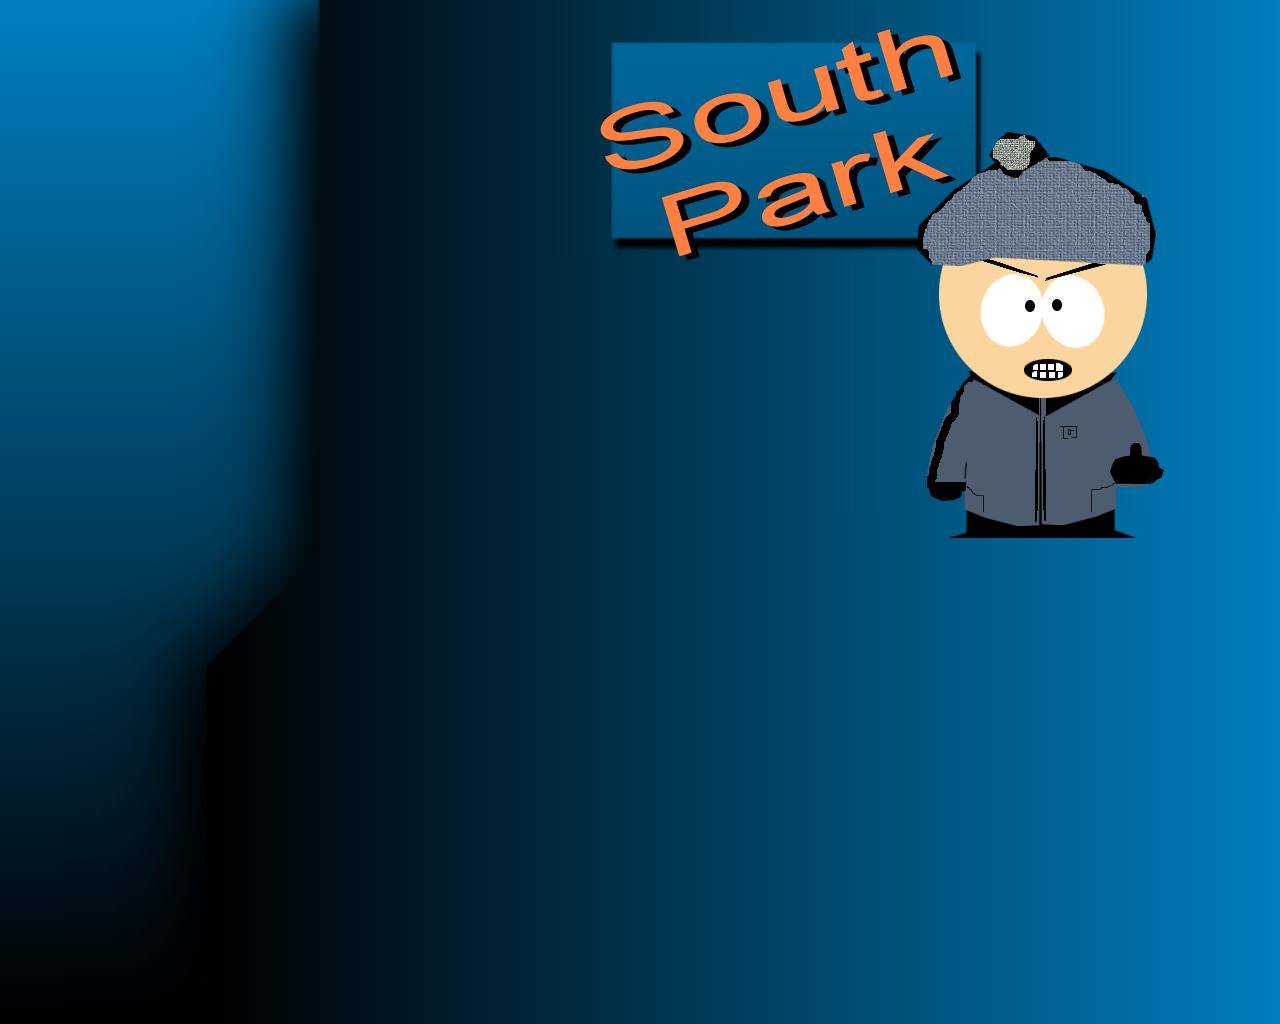 South Park sp